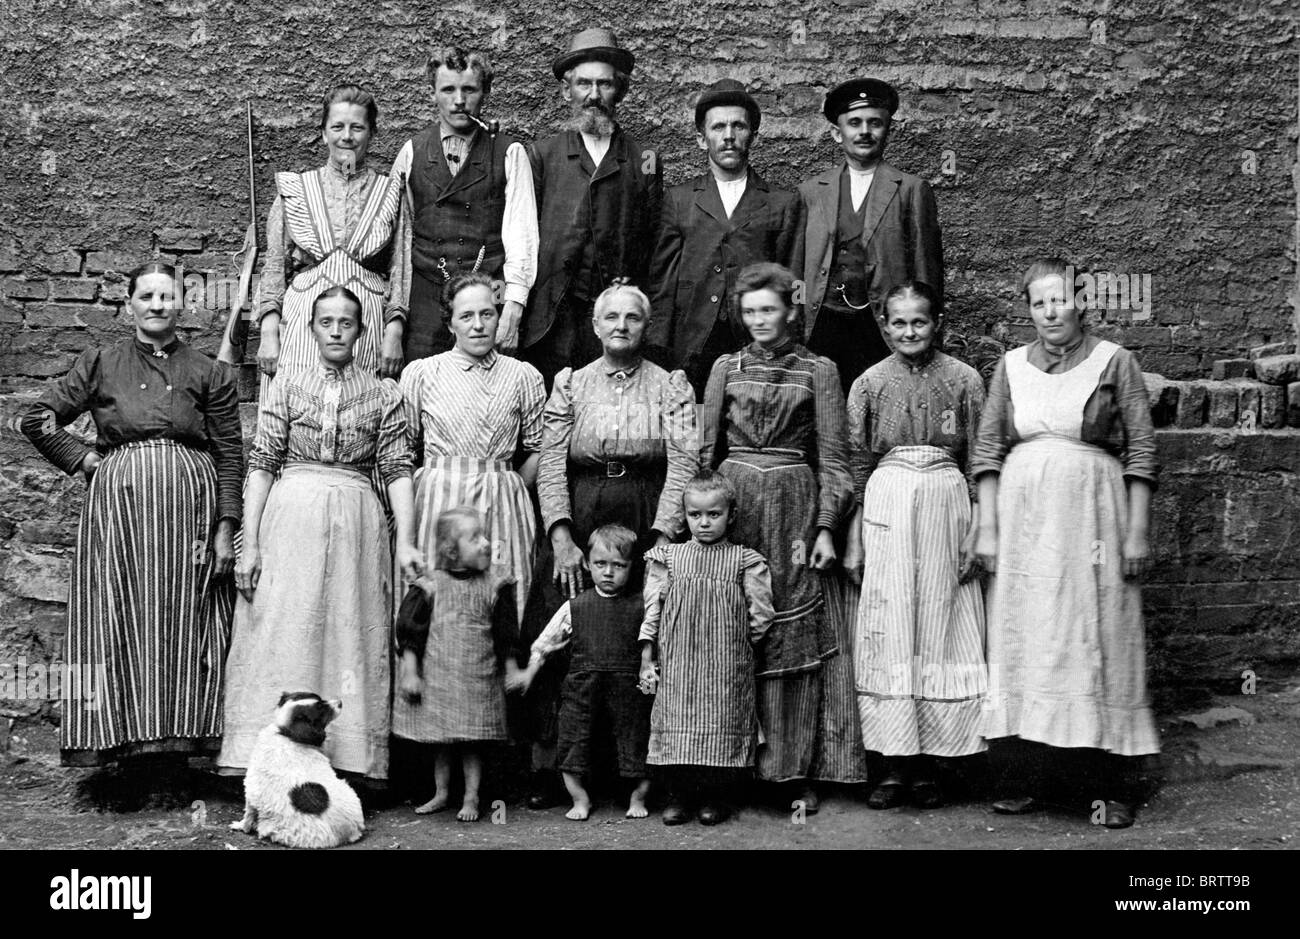 La familia ampliada del agricultor, imagen histórica, ca. 1930 Foto de stock